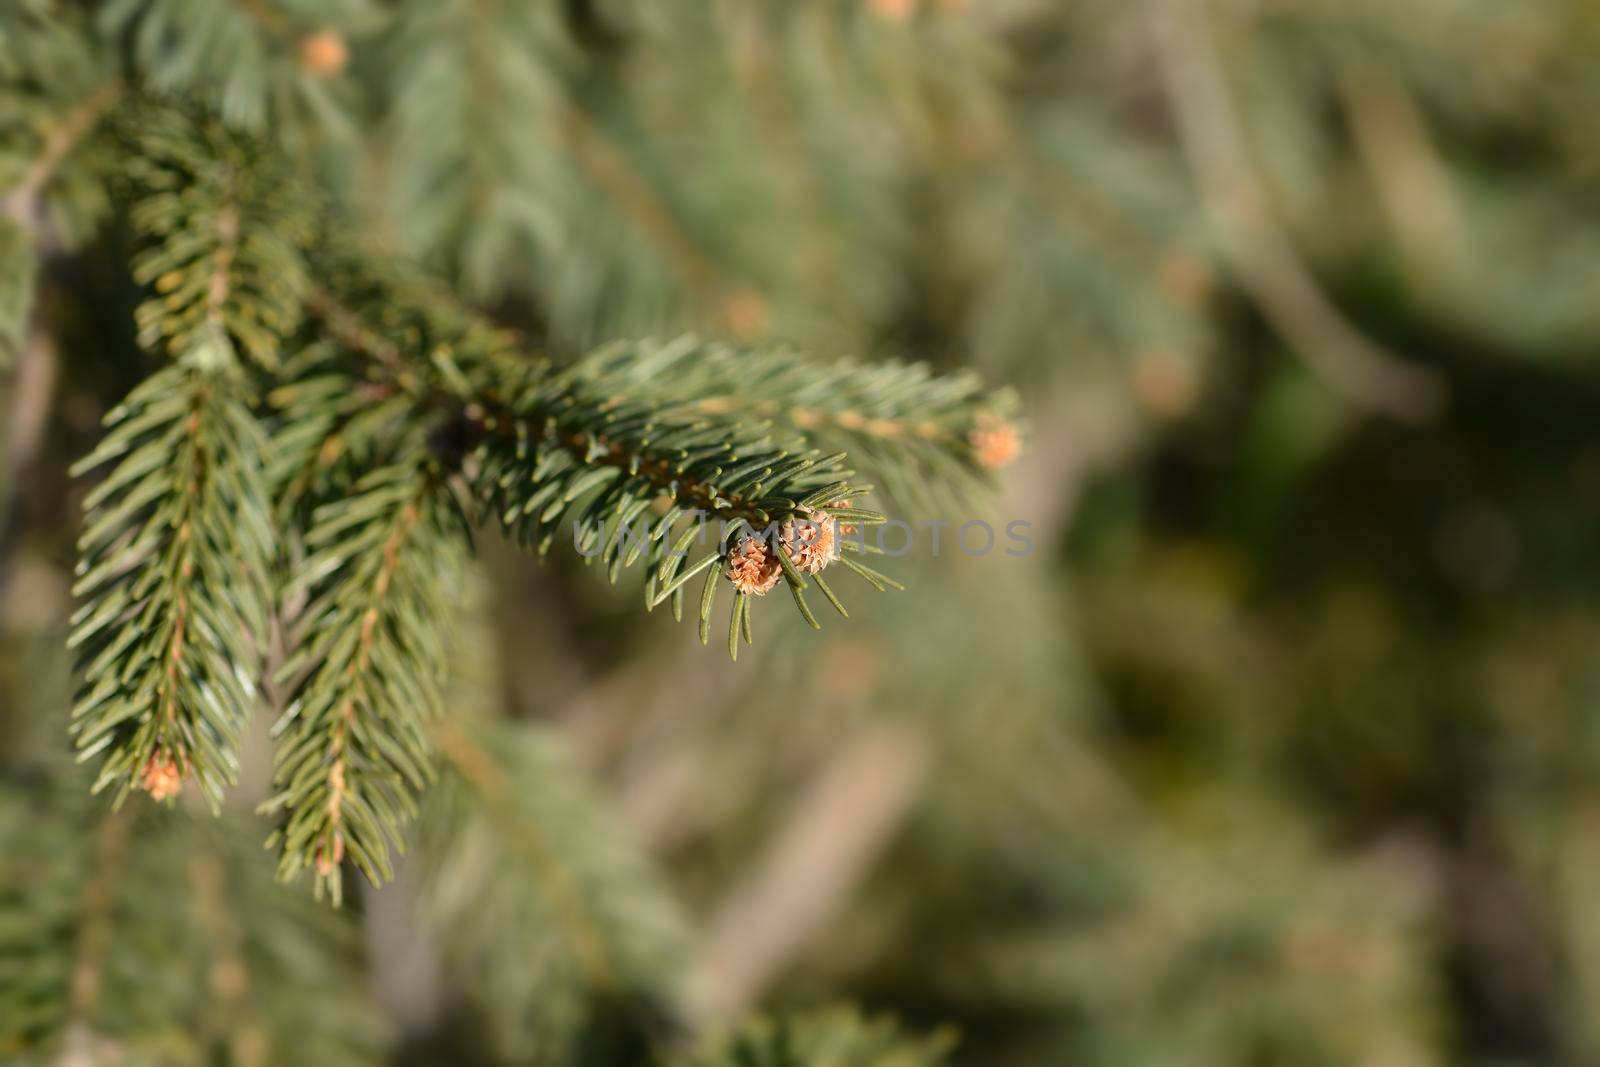 Colorado blue spruce by nahhan